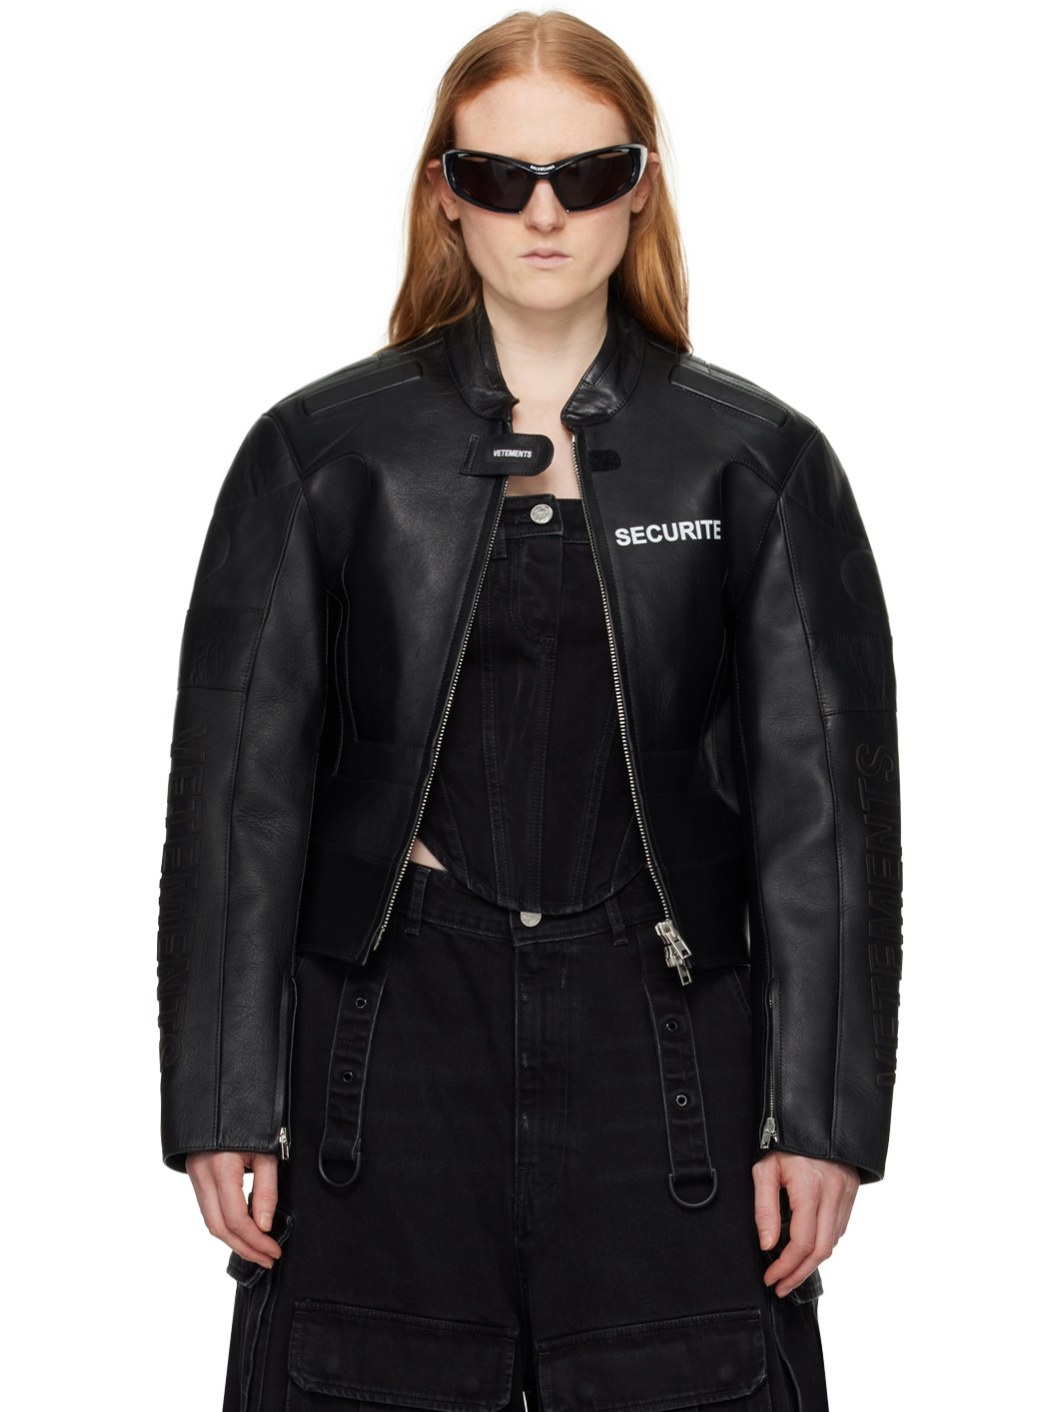 Black Securite Motorcross Leather Jacket - 1